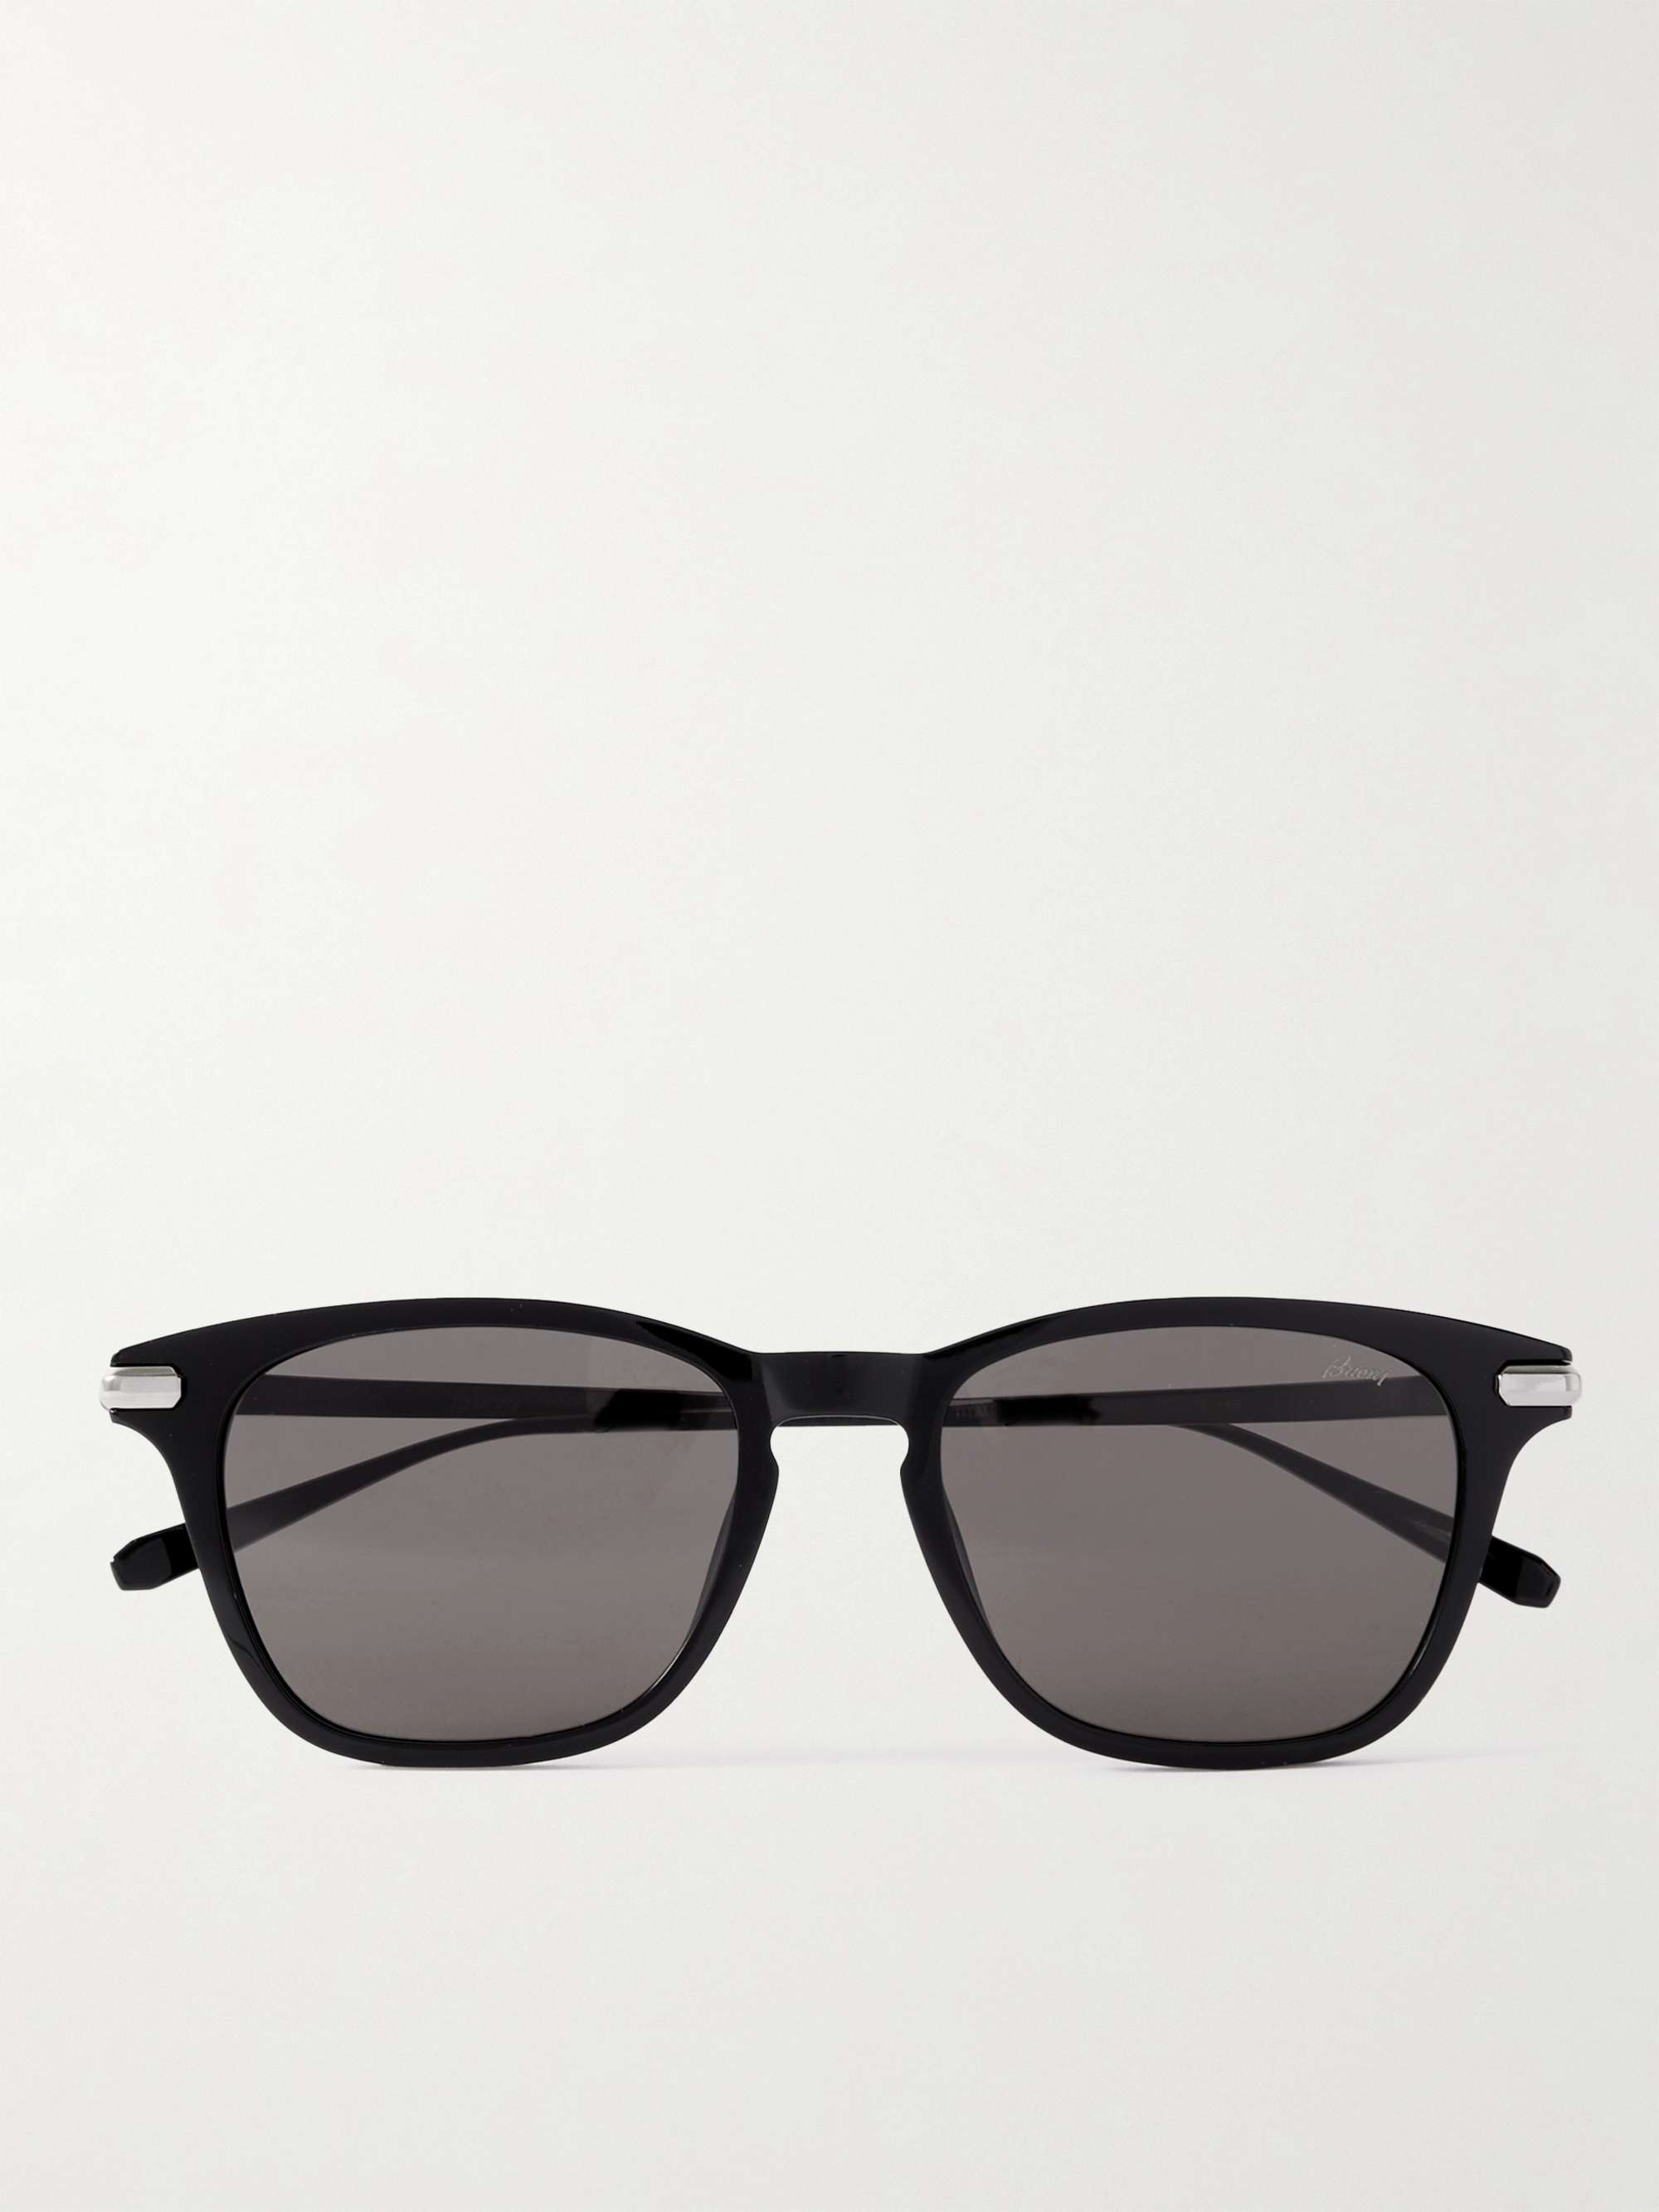 BRIONI D-Frame Tortoiseshell Acetate and Silver-Tone Sunglasses